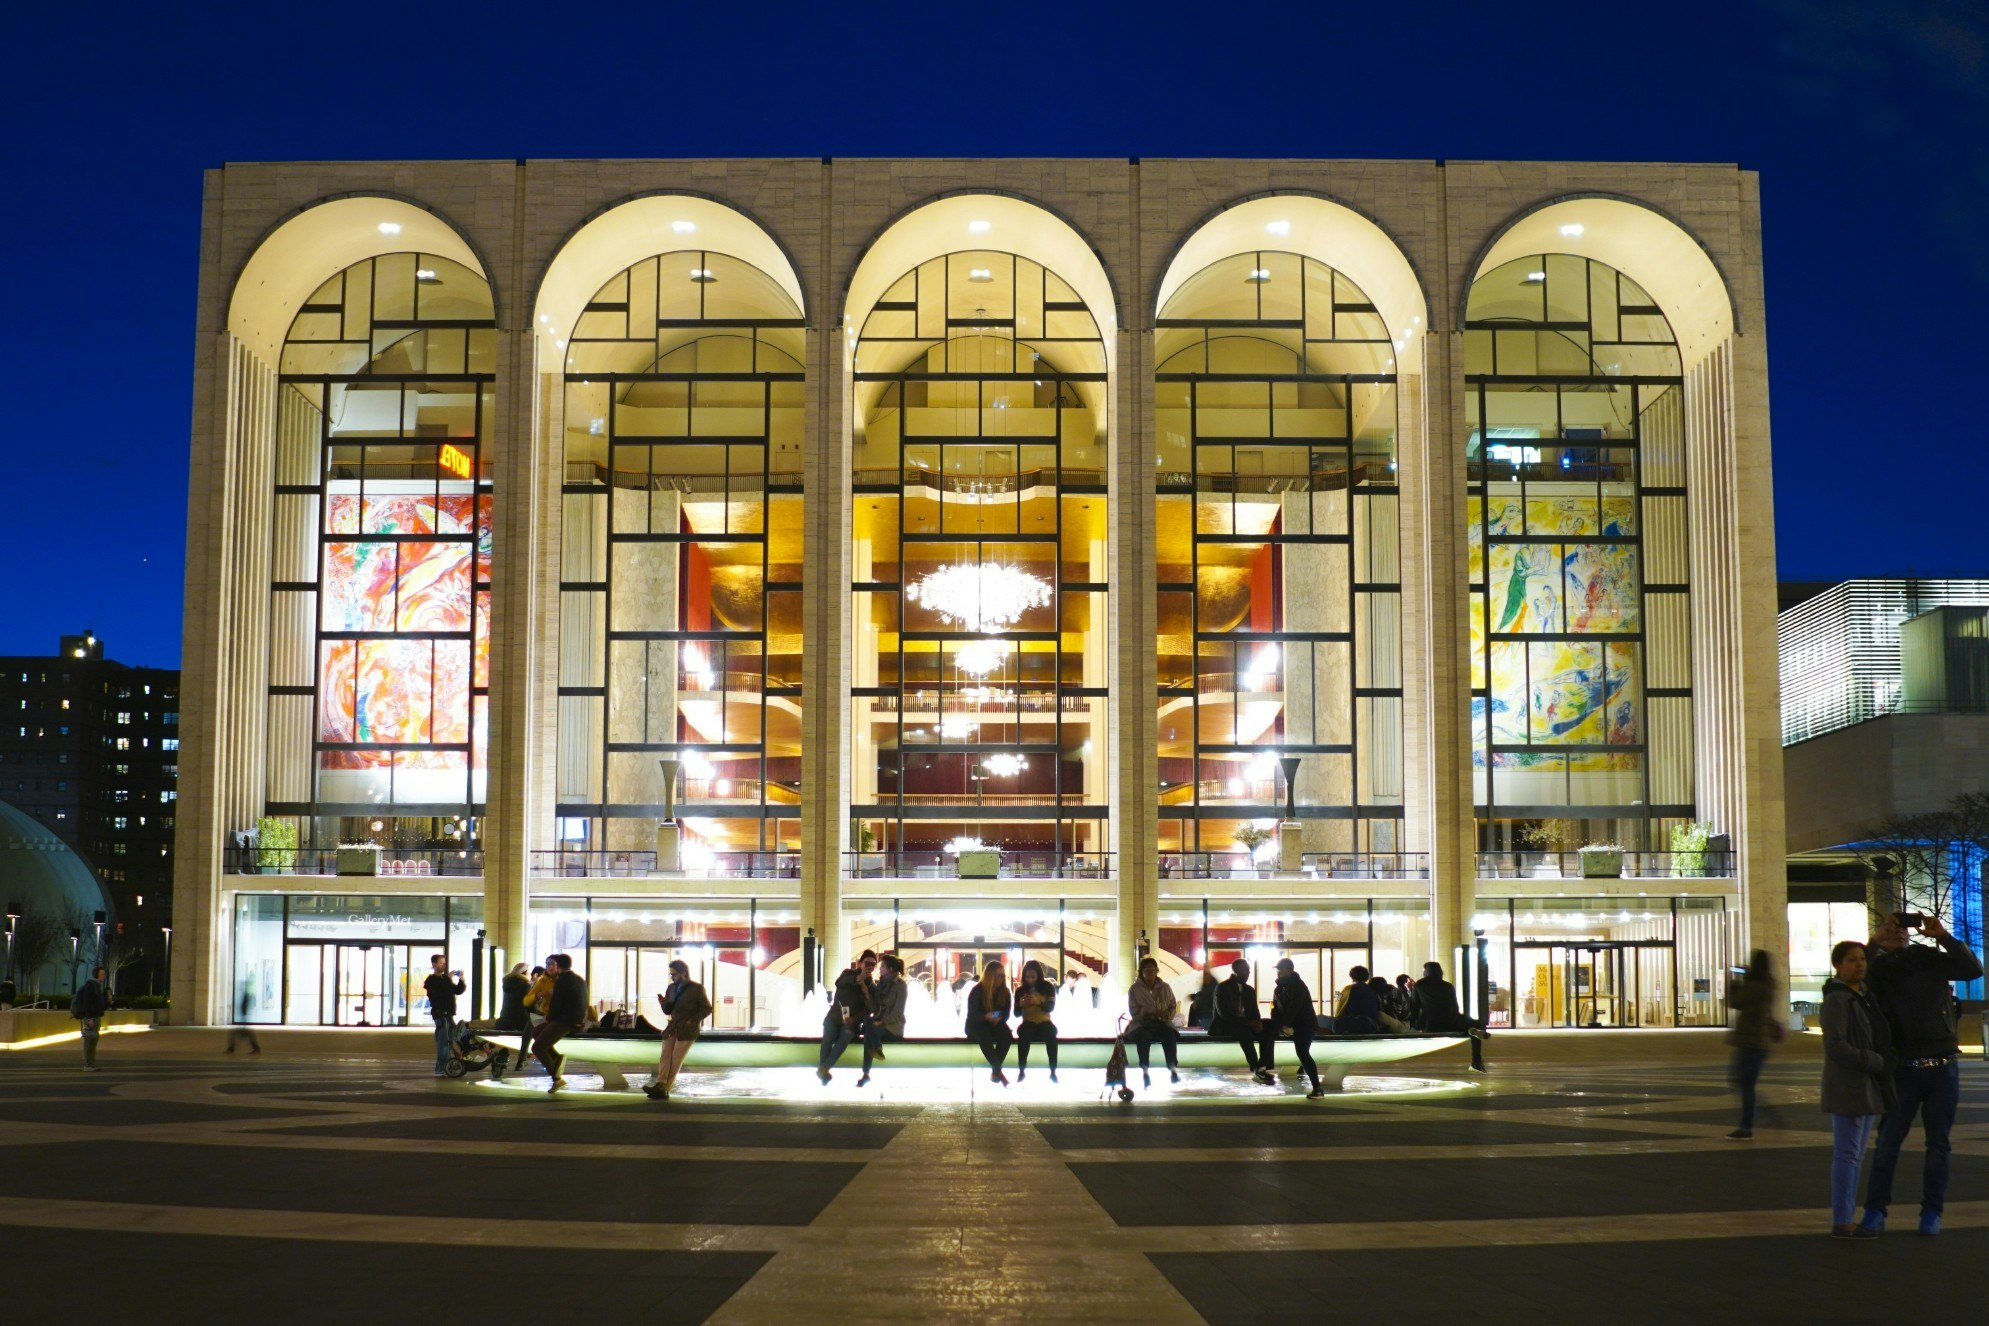 The Metropolitan Opera at Lincoln Center in Manhattan